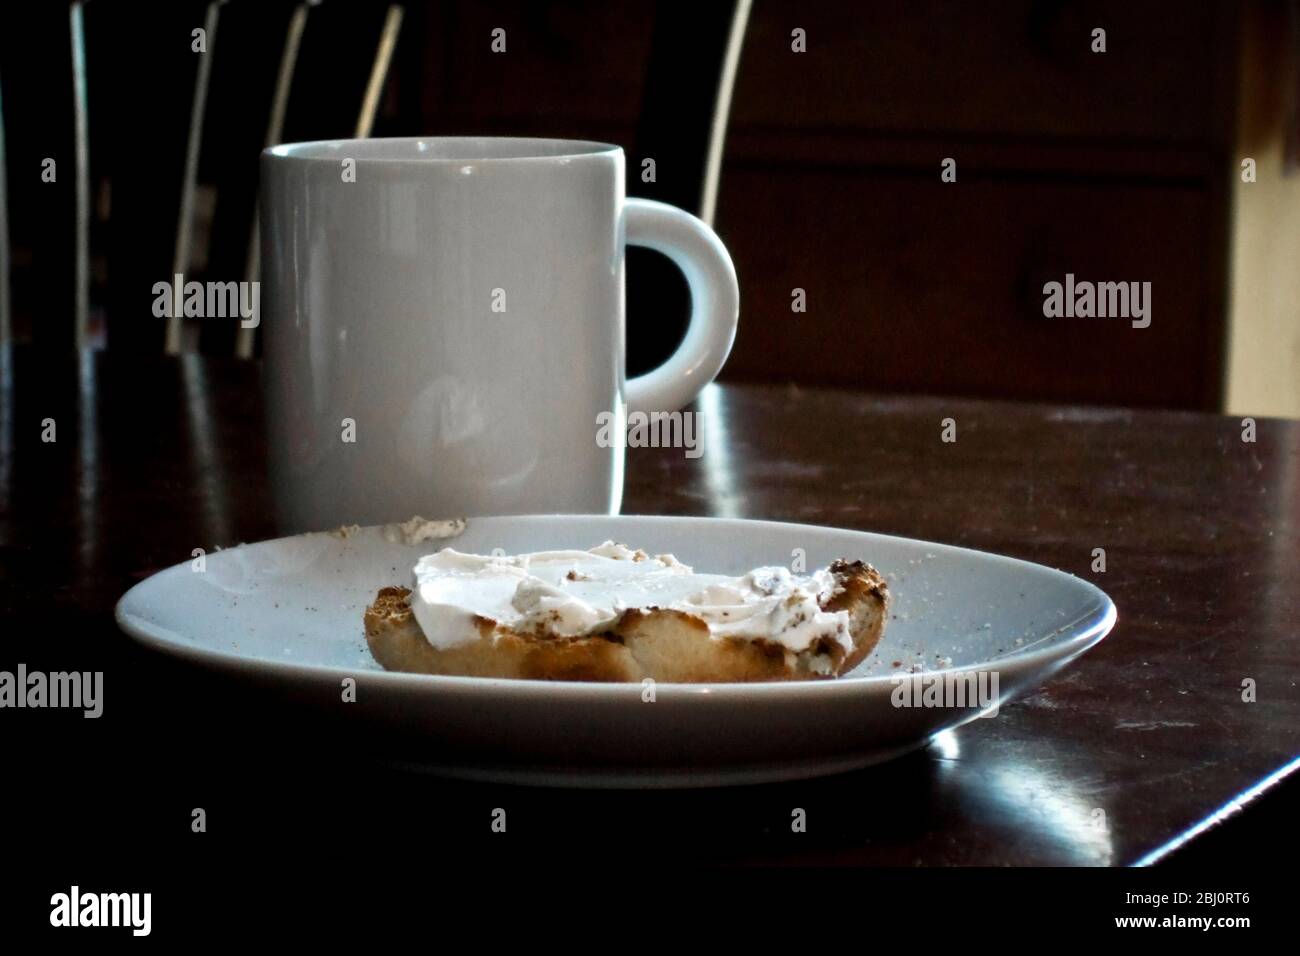 Muffin inglesa tostada con queso crema y bocado, con taza de café sobre mesa pulida - Foto de stock